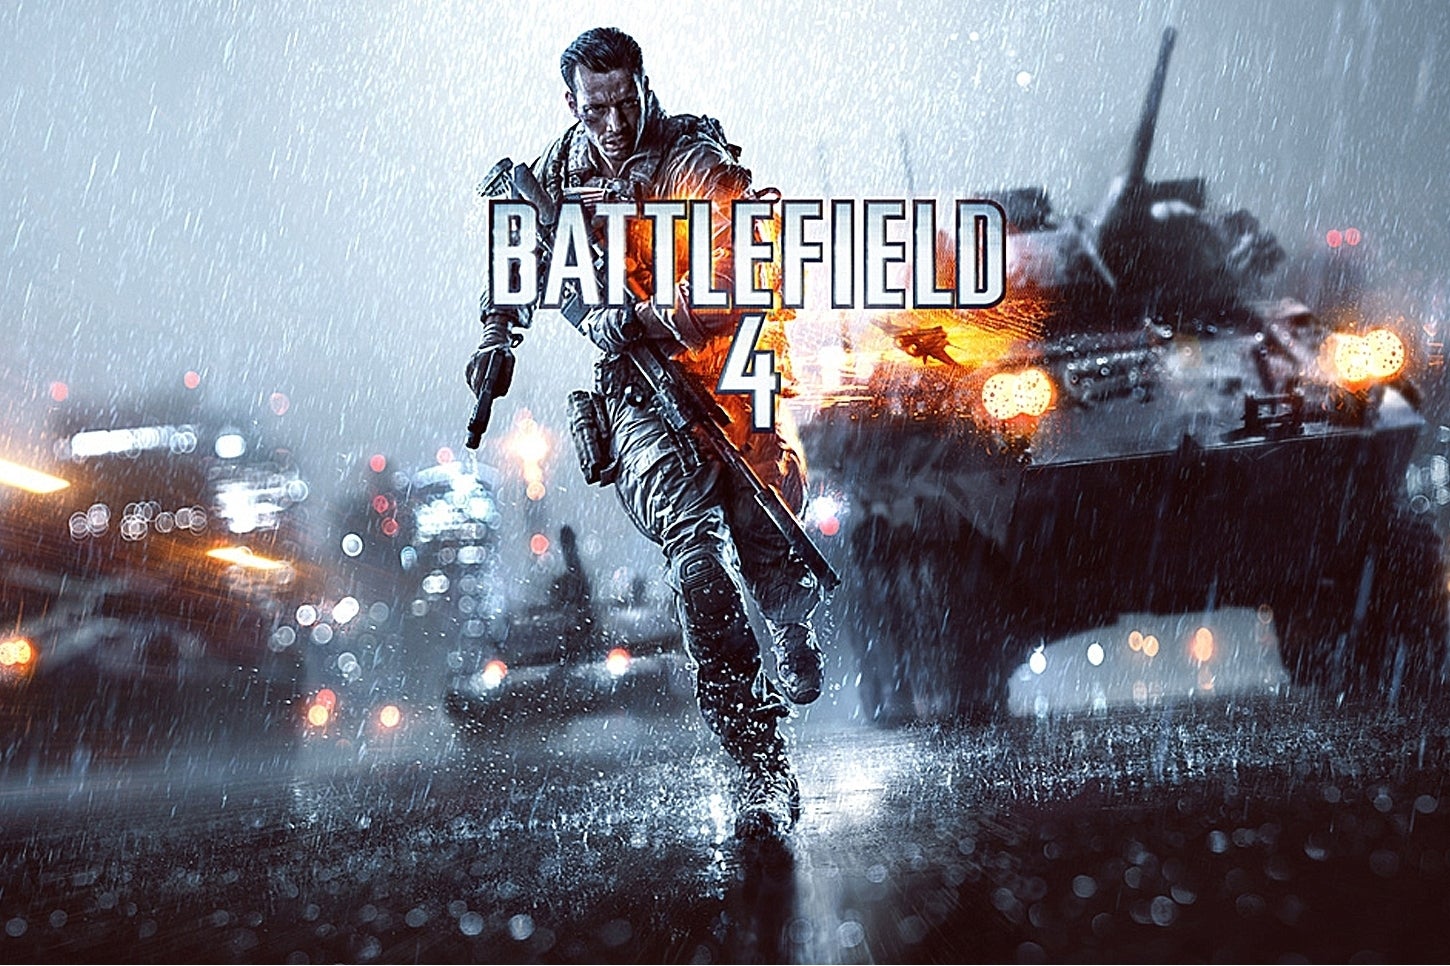 Imagem para Subscritores Premium de Battlefield 3 com acesso à beta de Battlefield 4?